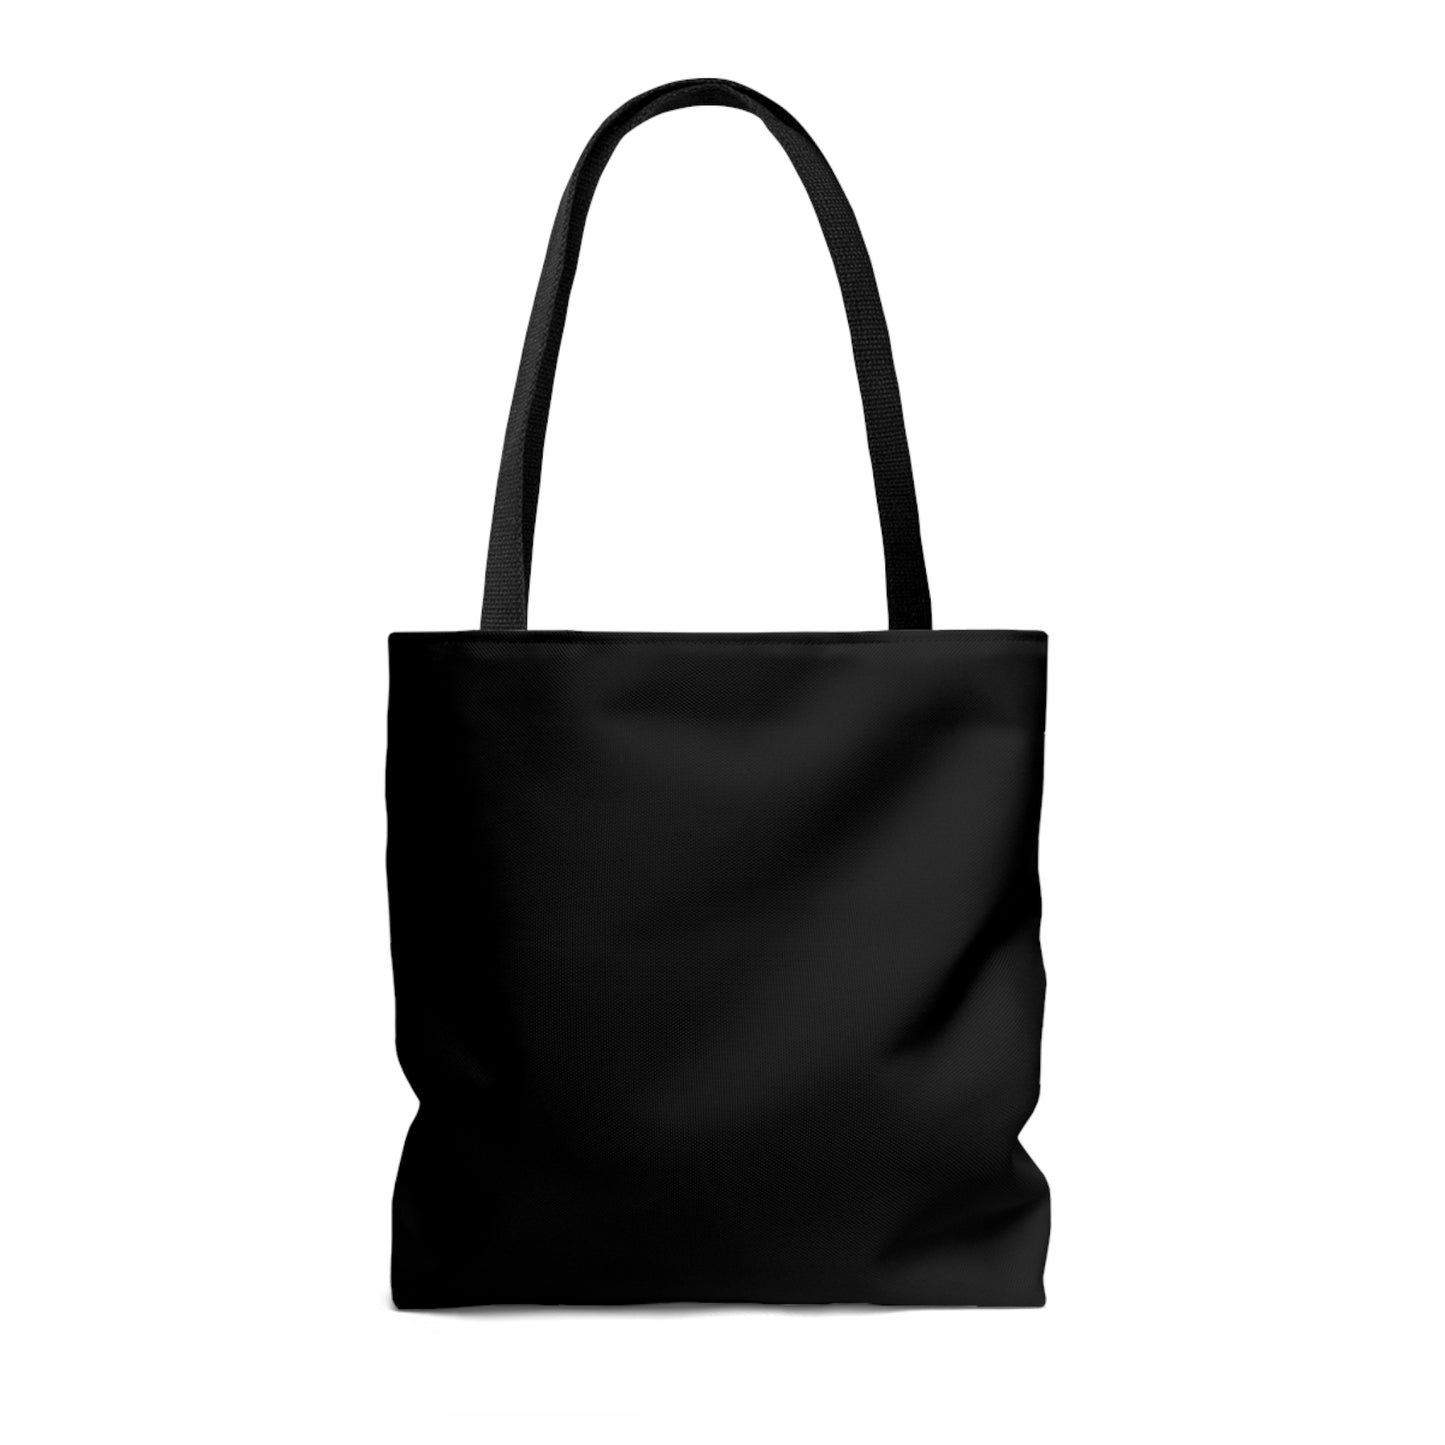 Tote Bag (AOP)- Edinburgh Black Collage Art Design